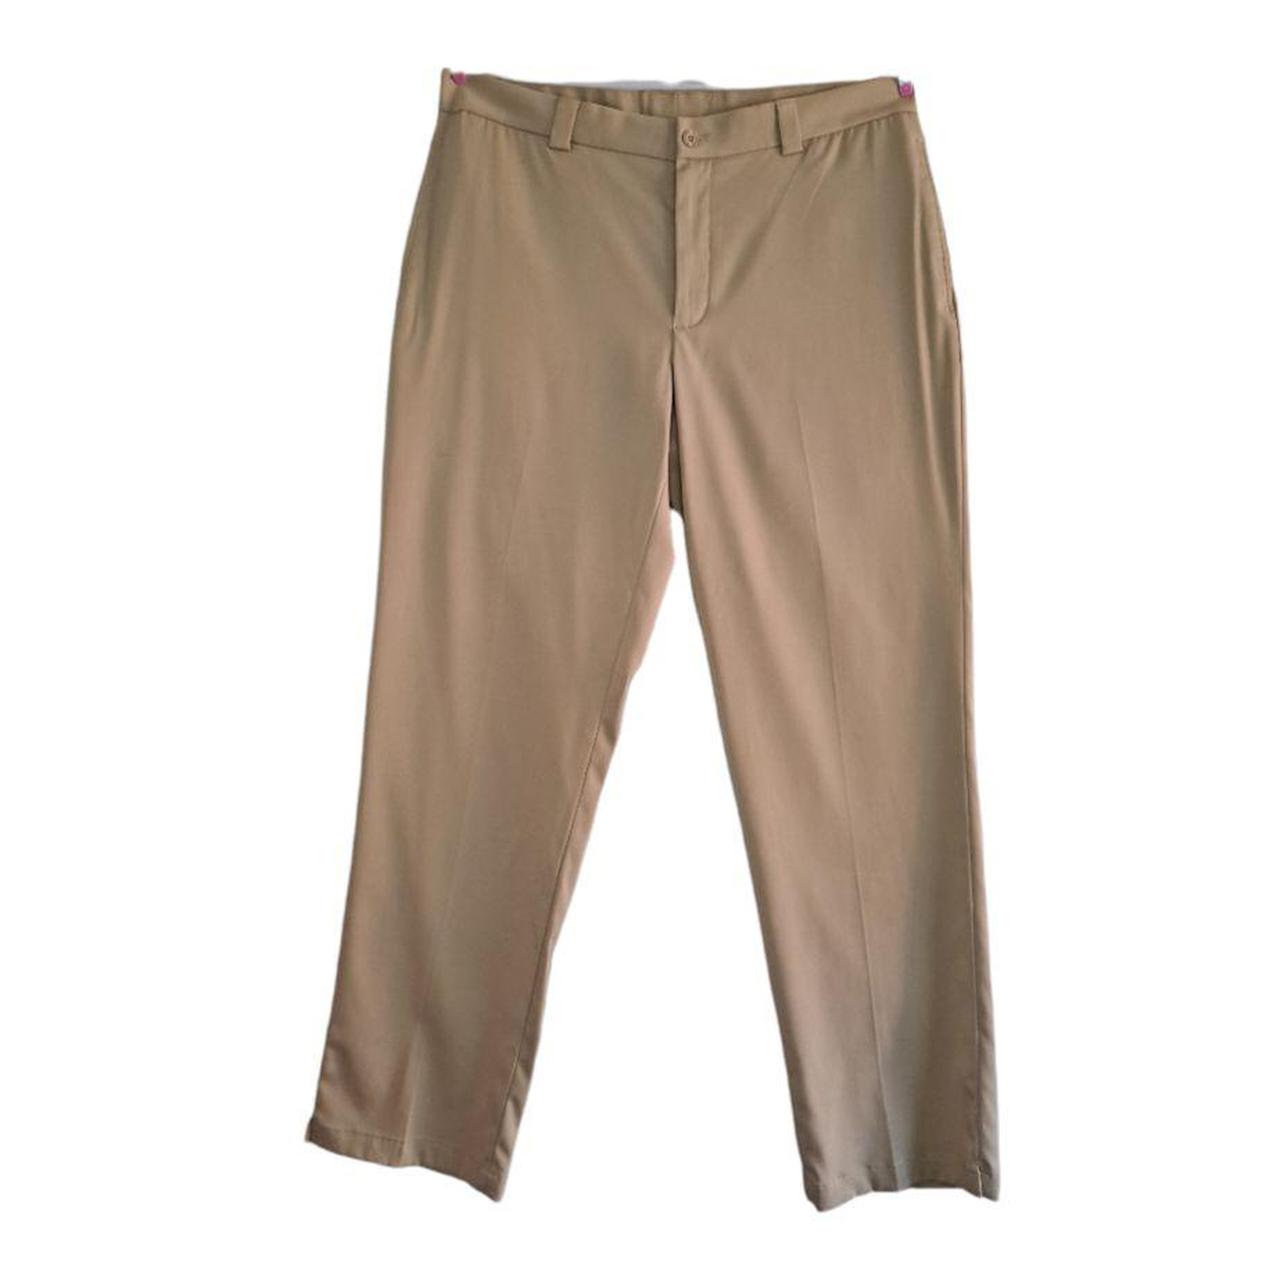 Product Image 1 - Slazenger Golf Pants 
Color -